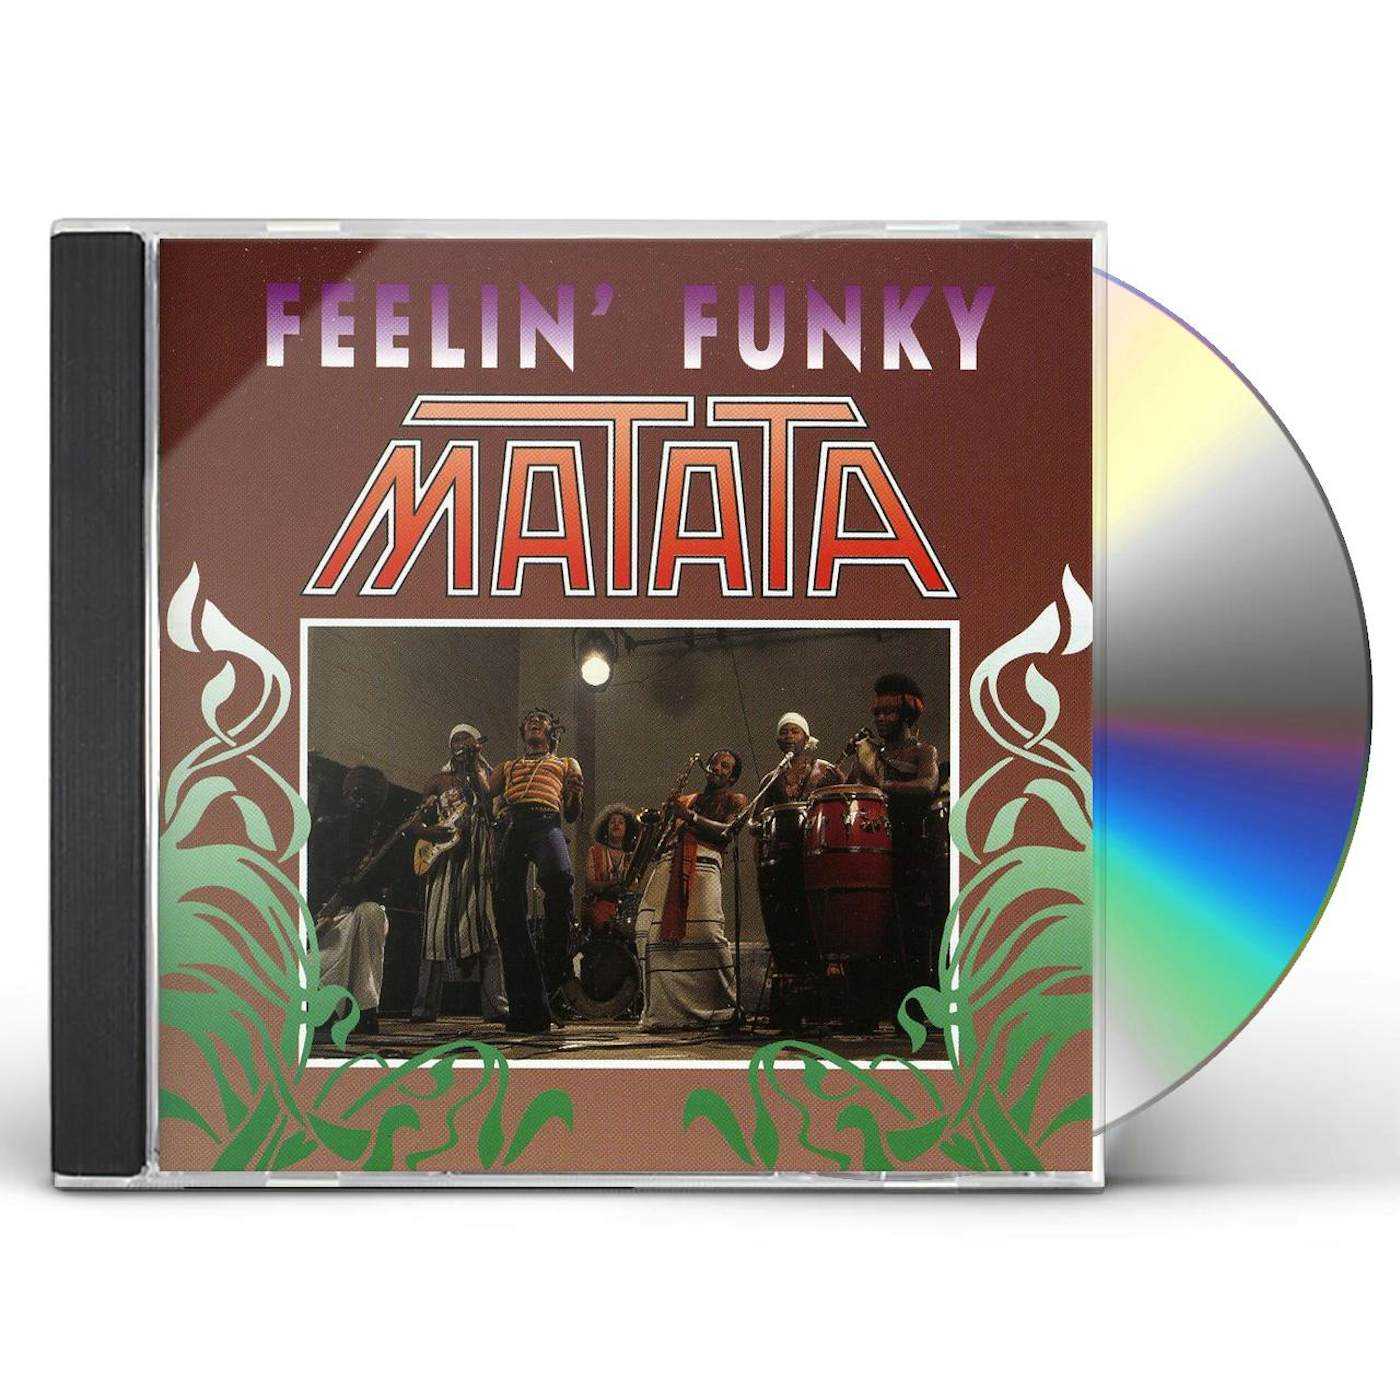 Matata FEELIN FUNKY CD